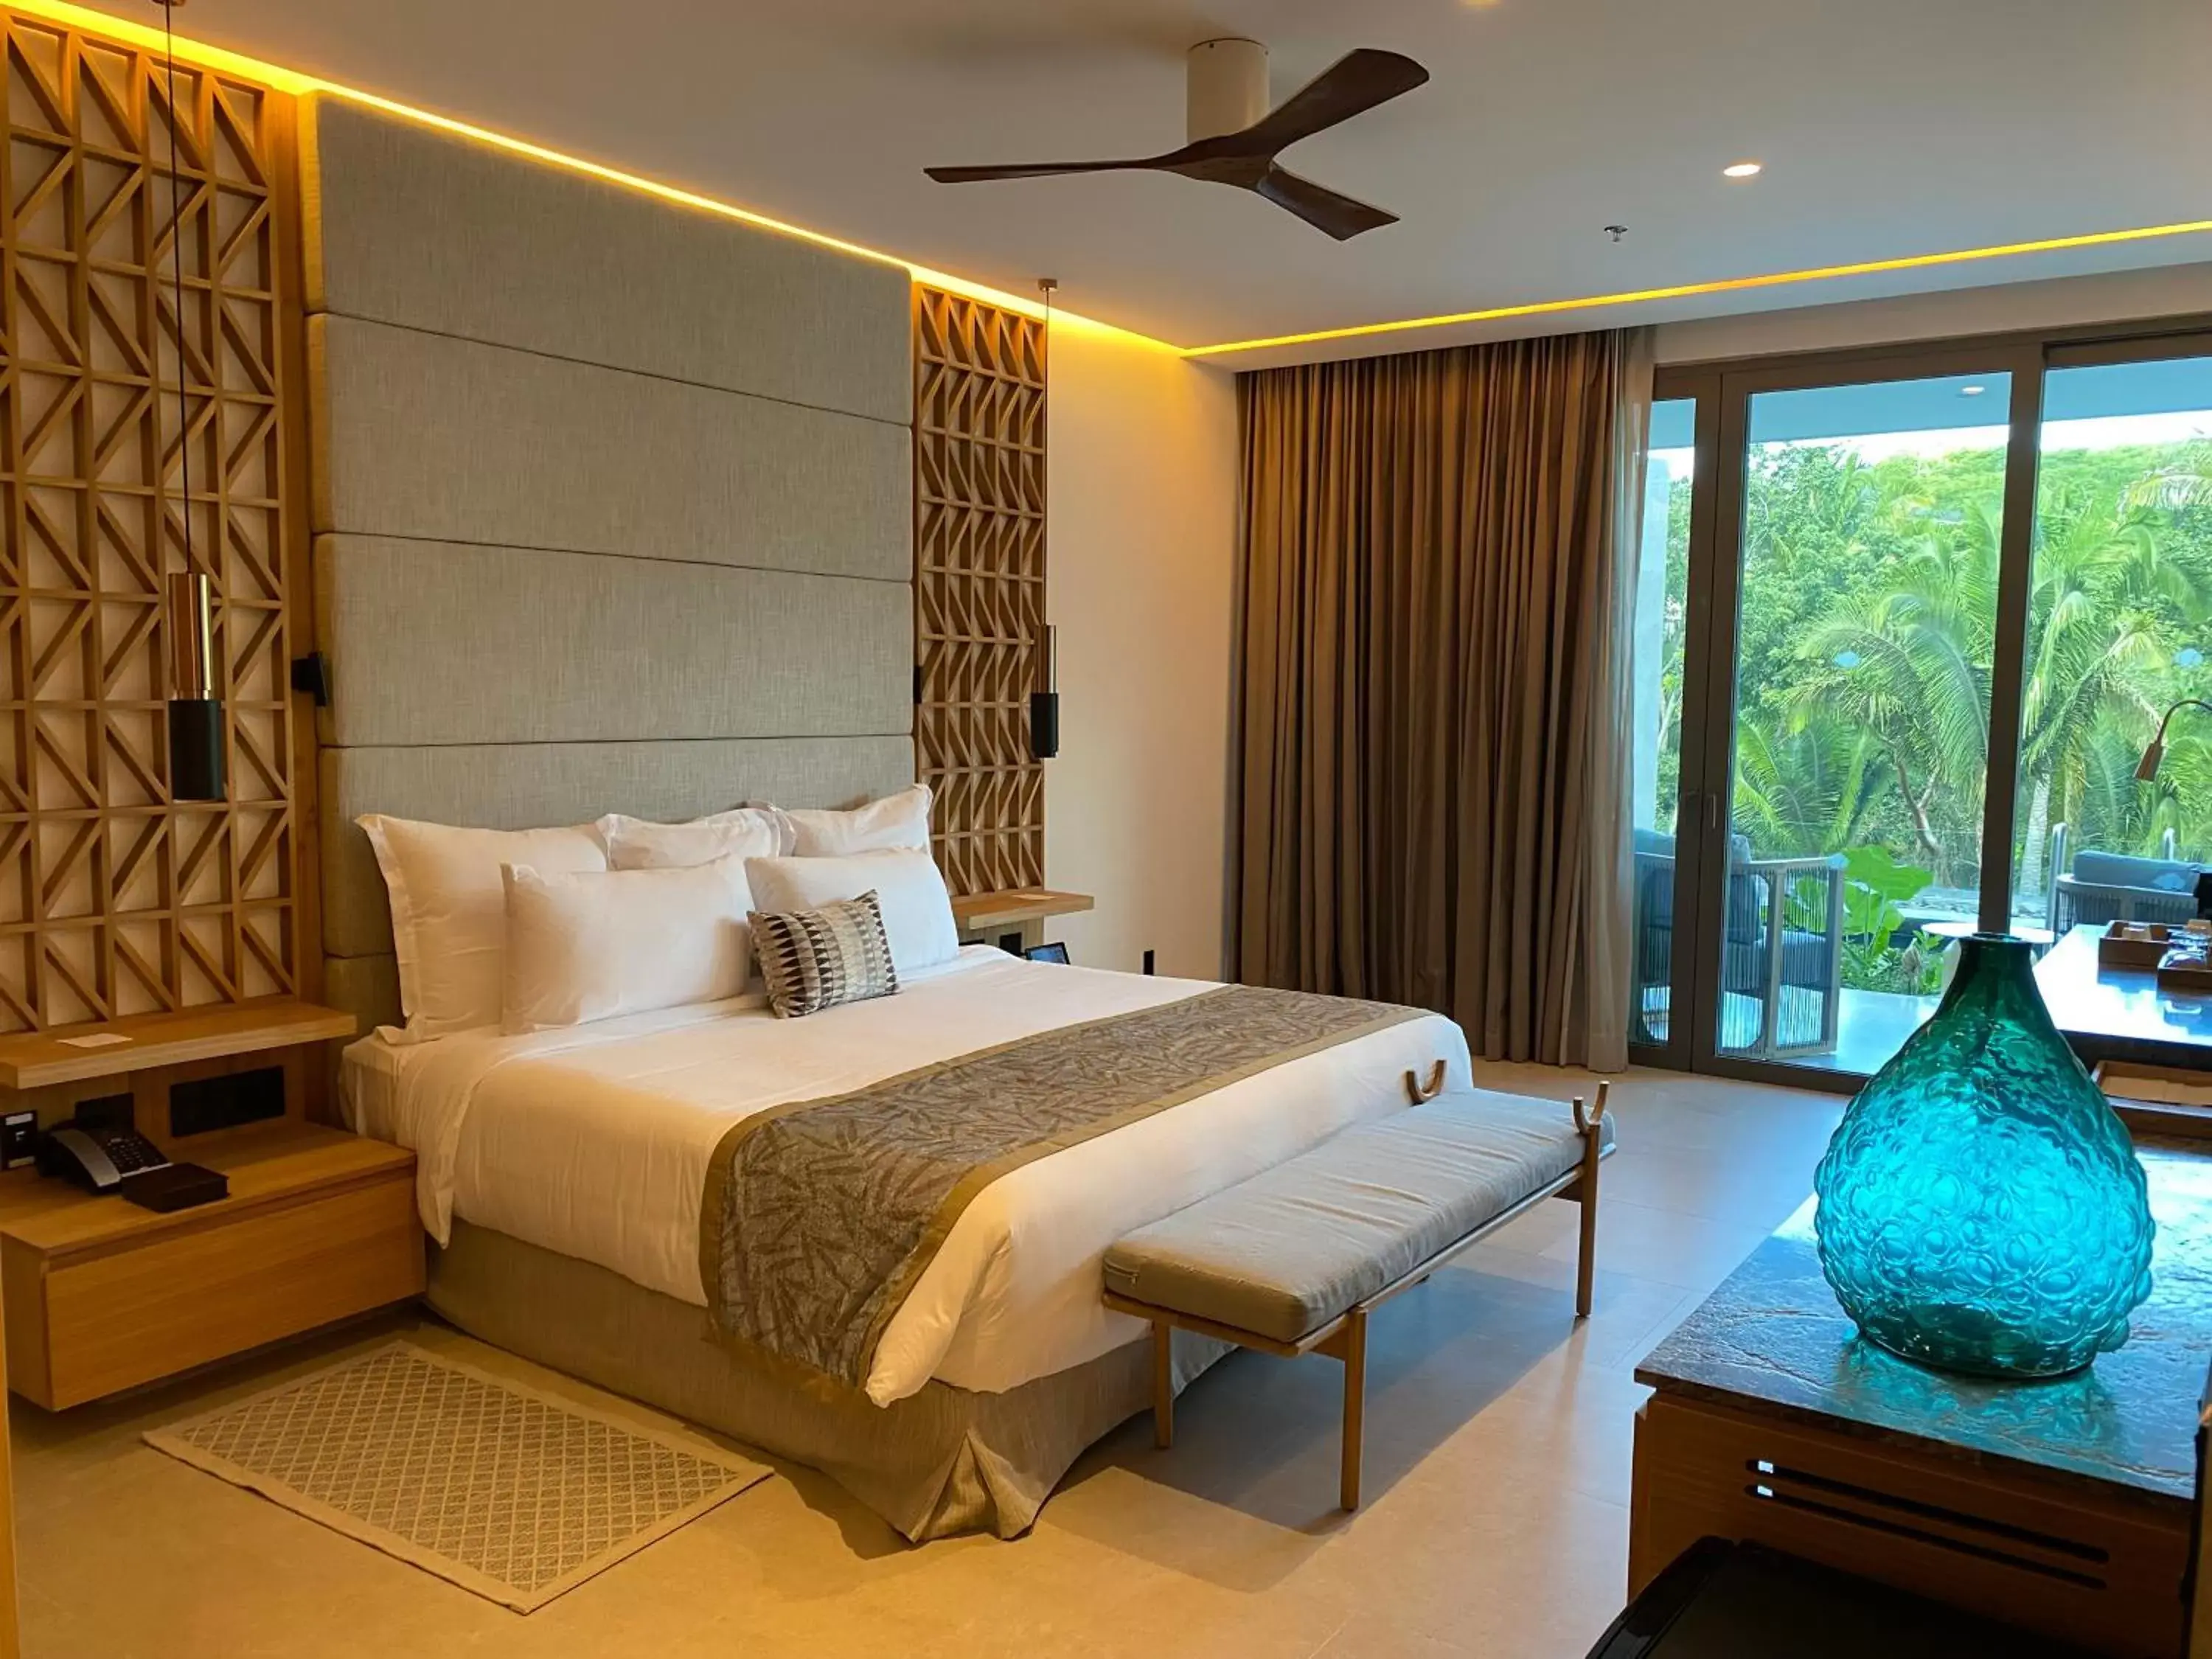 Bedroom, Bed in Dreams Bahia Mita Surf and Spa - All Inclusive